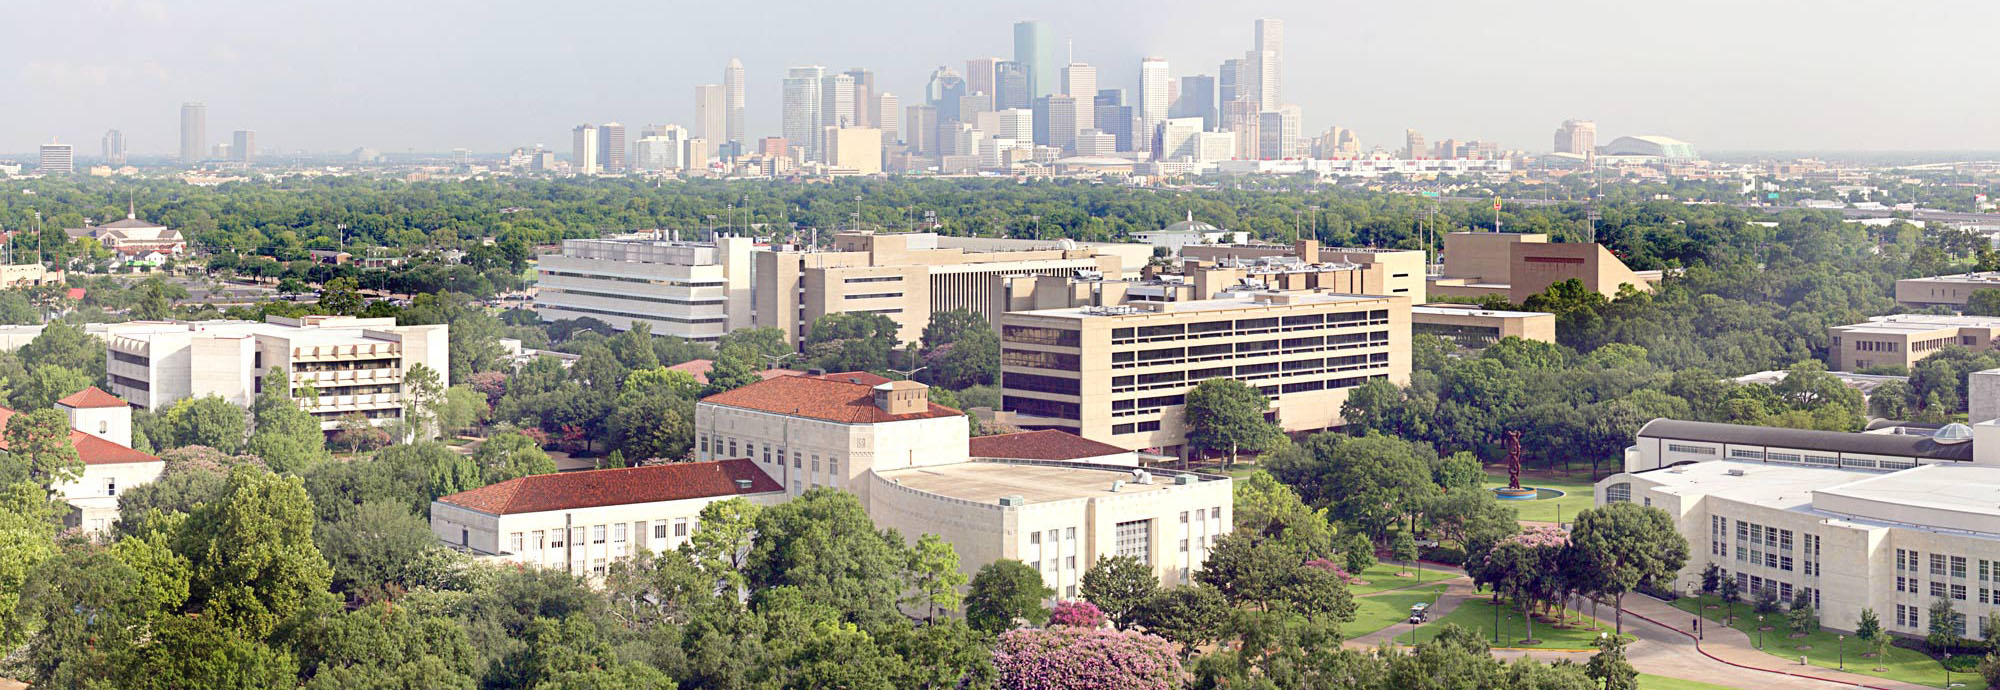 University of Houston with Houston Skyline in background